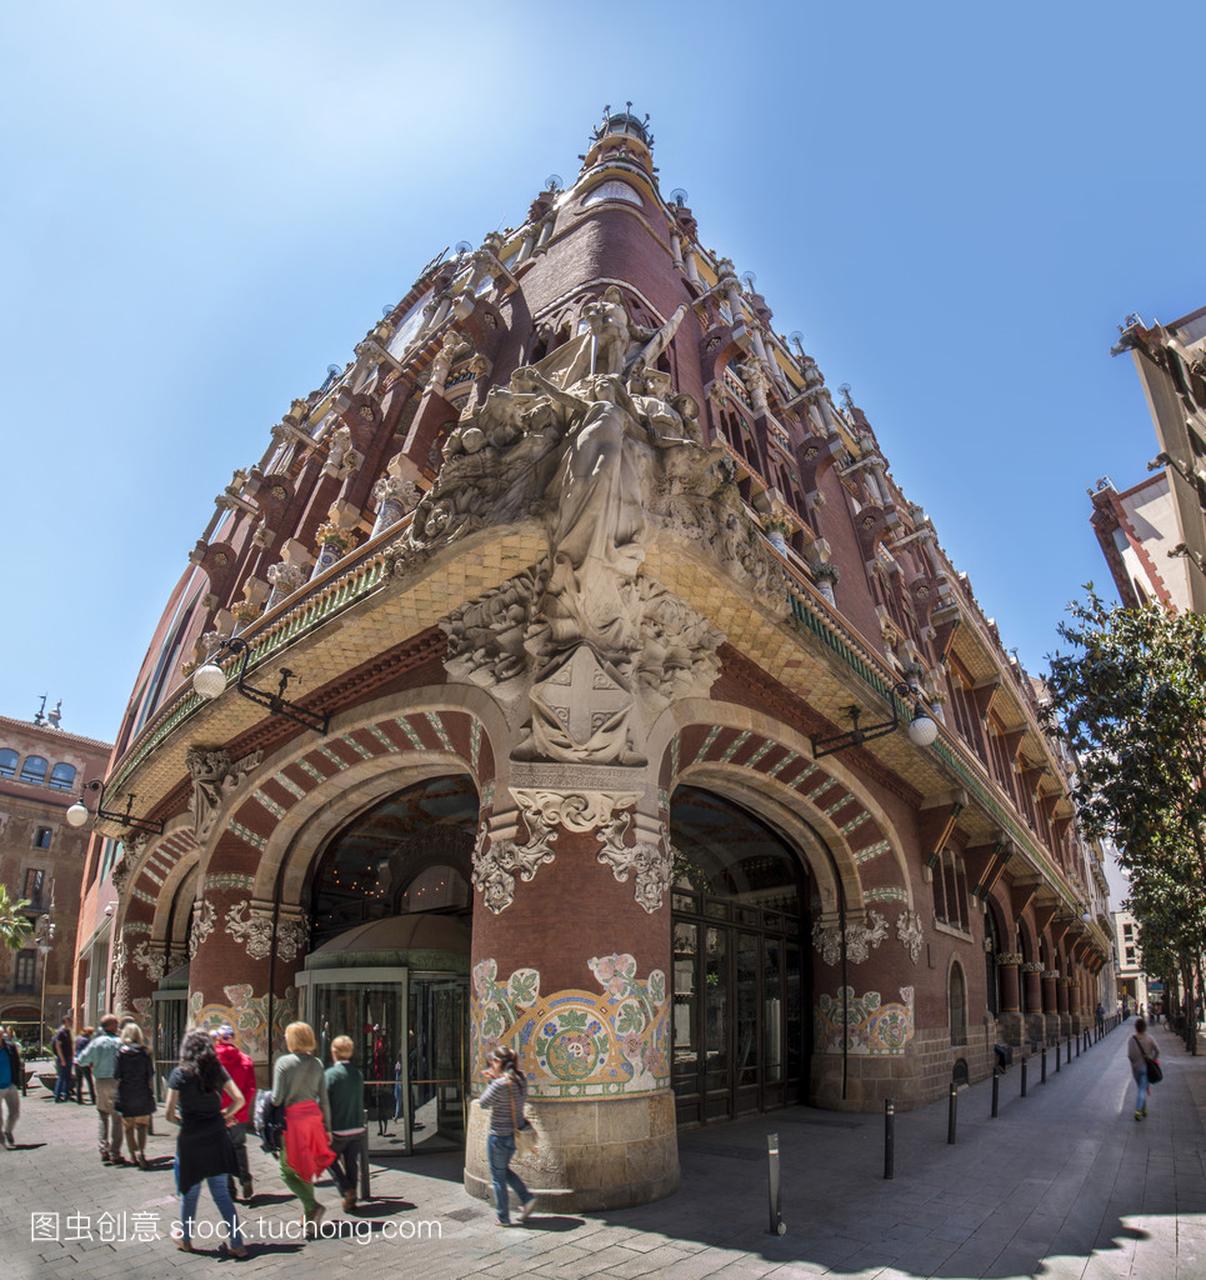 Catalana Music Hall located in Barcelona